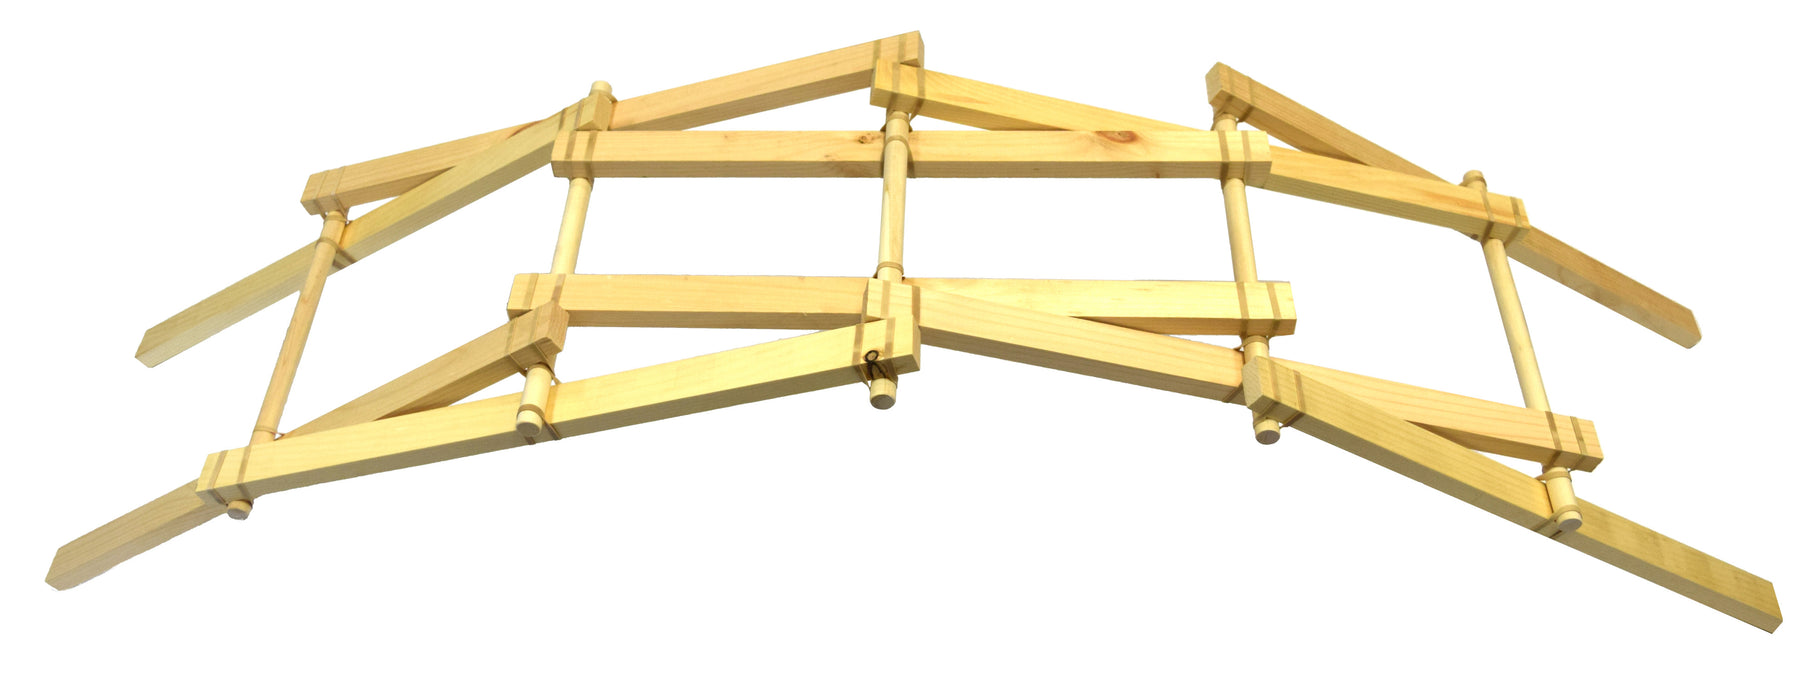 Leonardo Da Vinci Bridge Kit - Explore Engineering Principles - Spans 5 Feet When Assembled, No Tools Required - Garage Physics